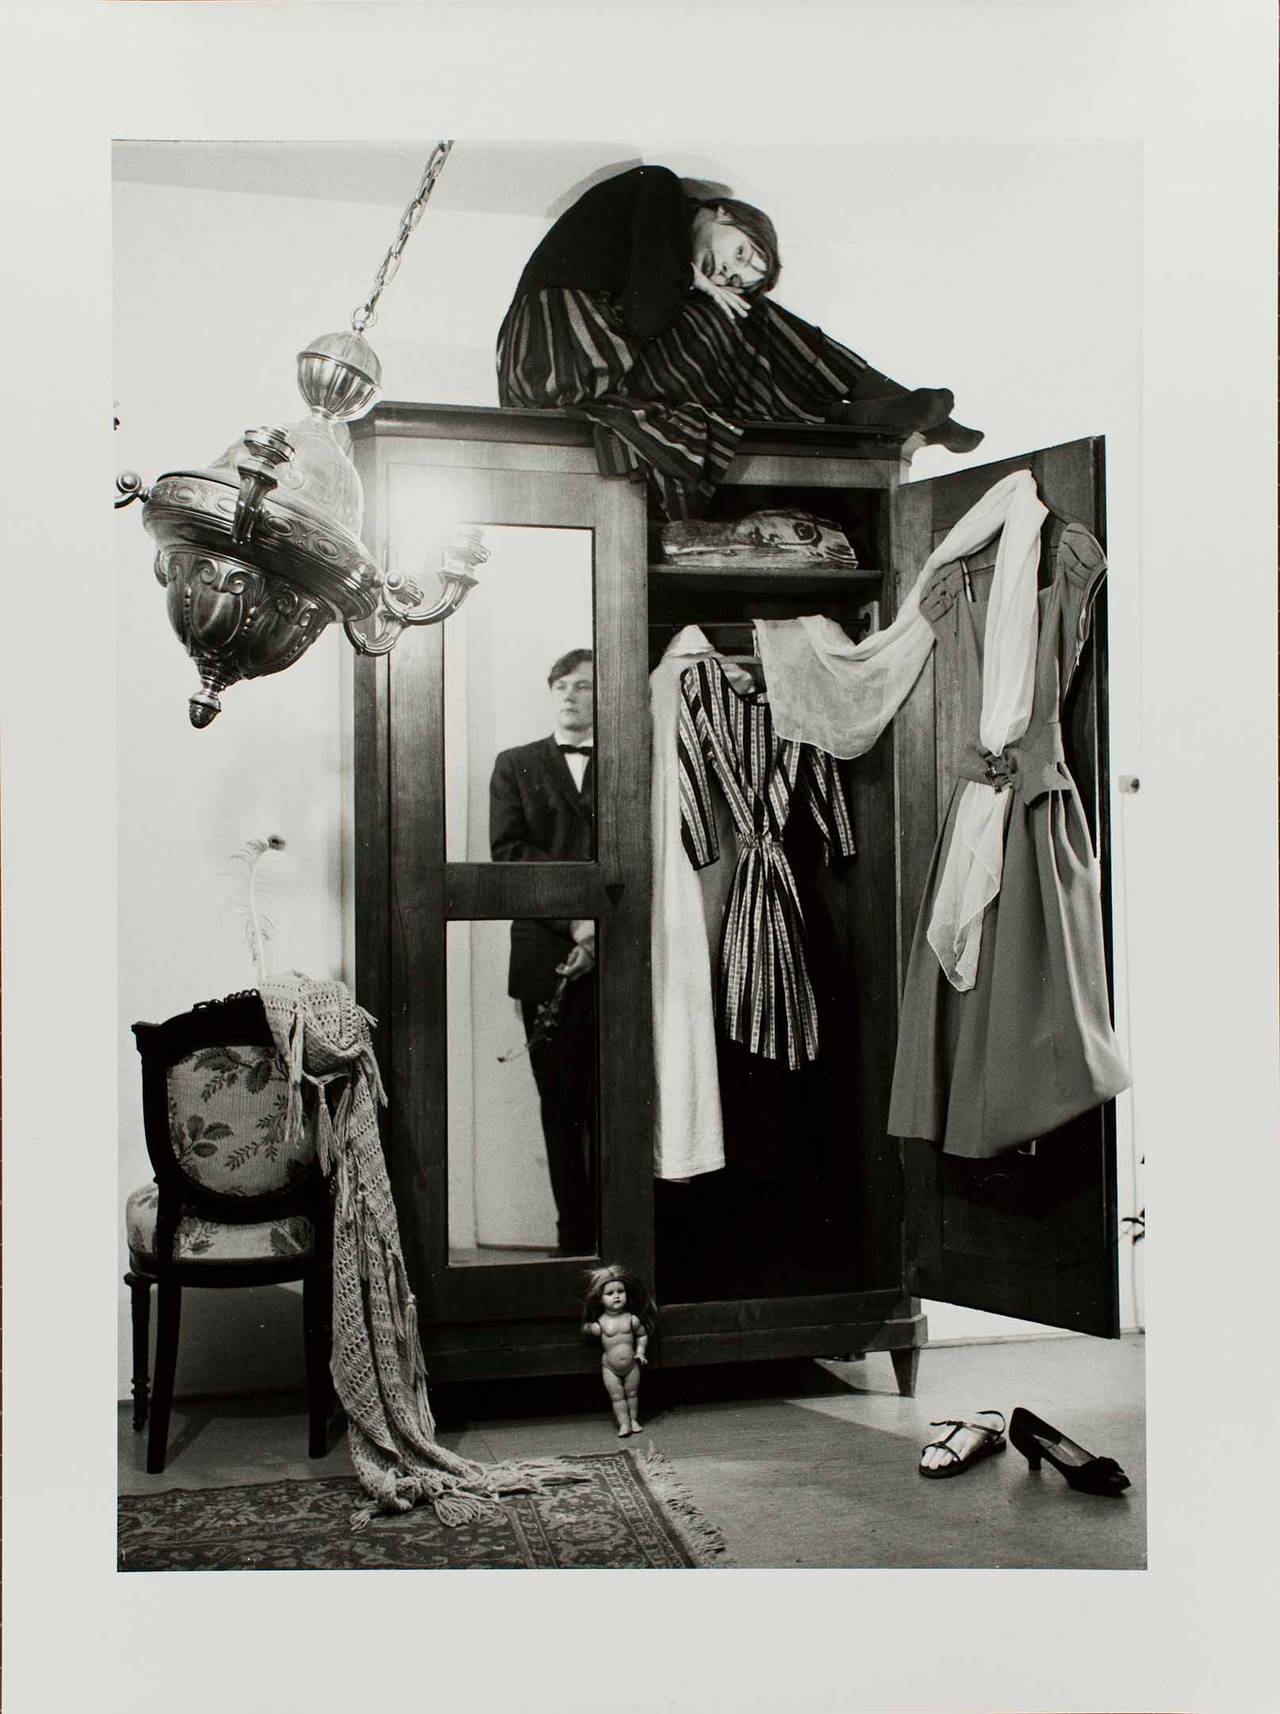 Floris Neususs Black and White Photograph - Schrankbild (Cabinet Picture), München, from the Traumbild series